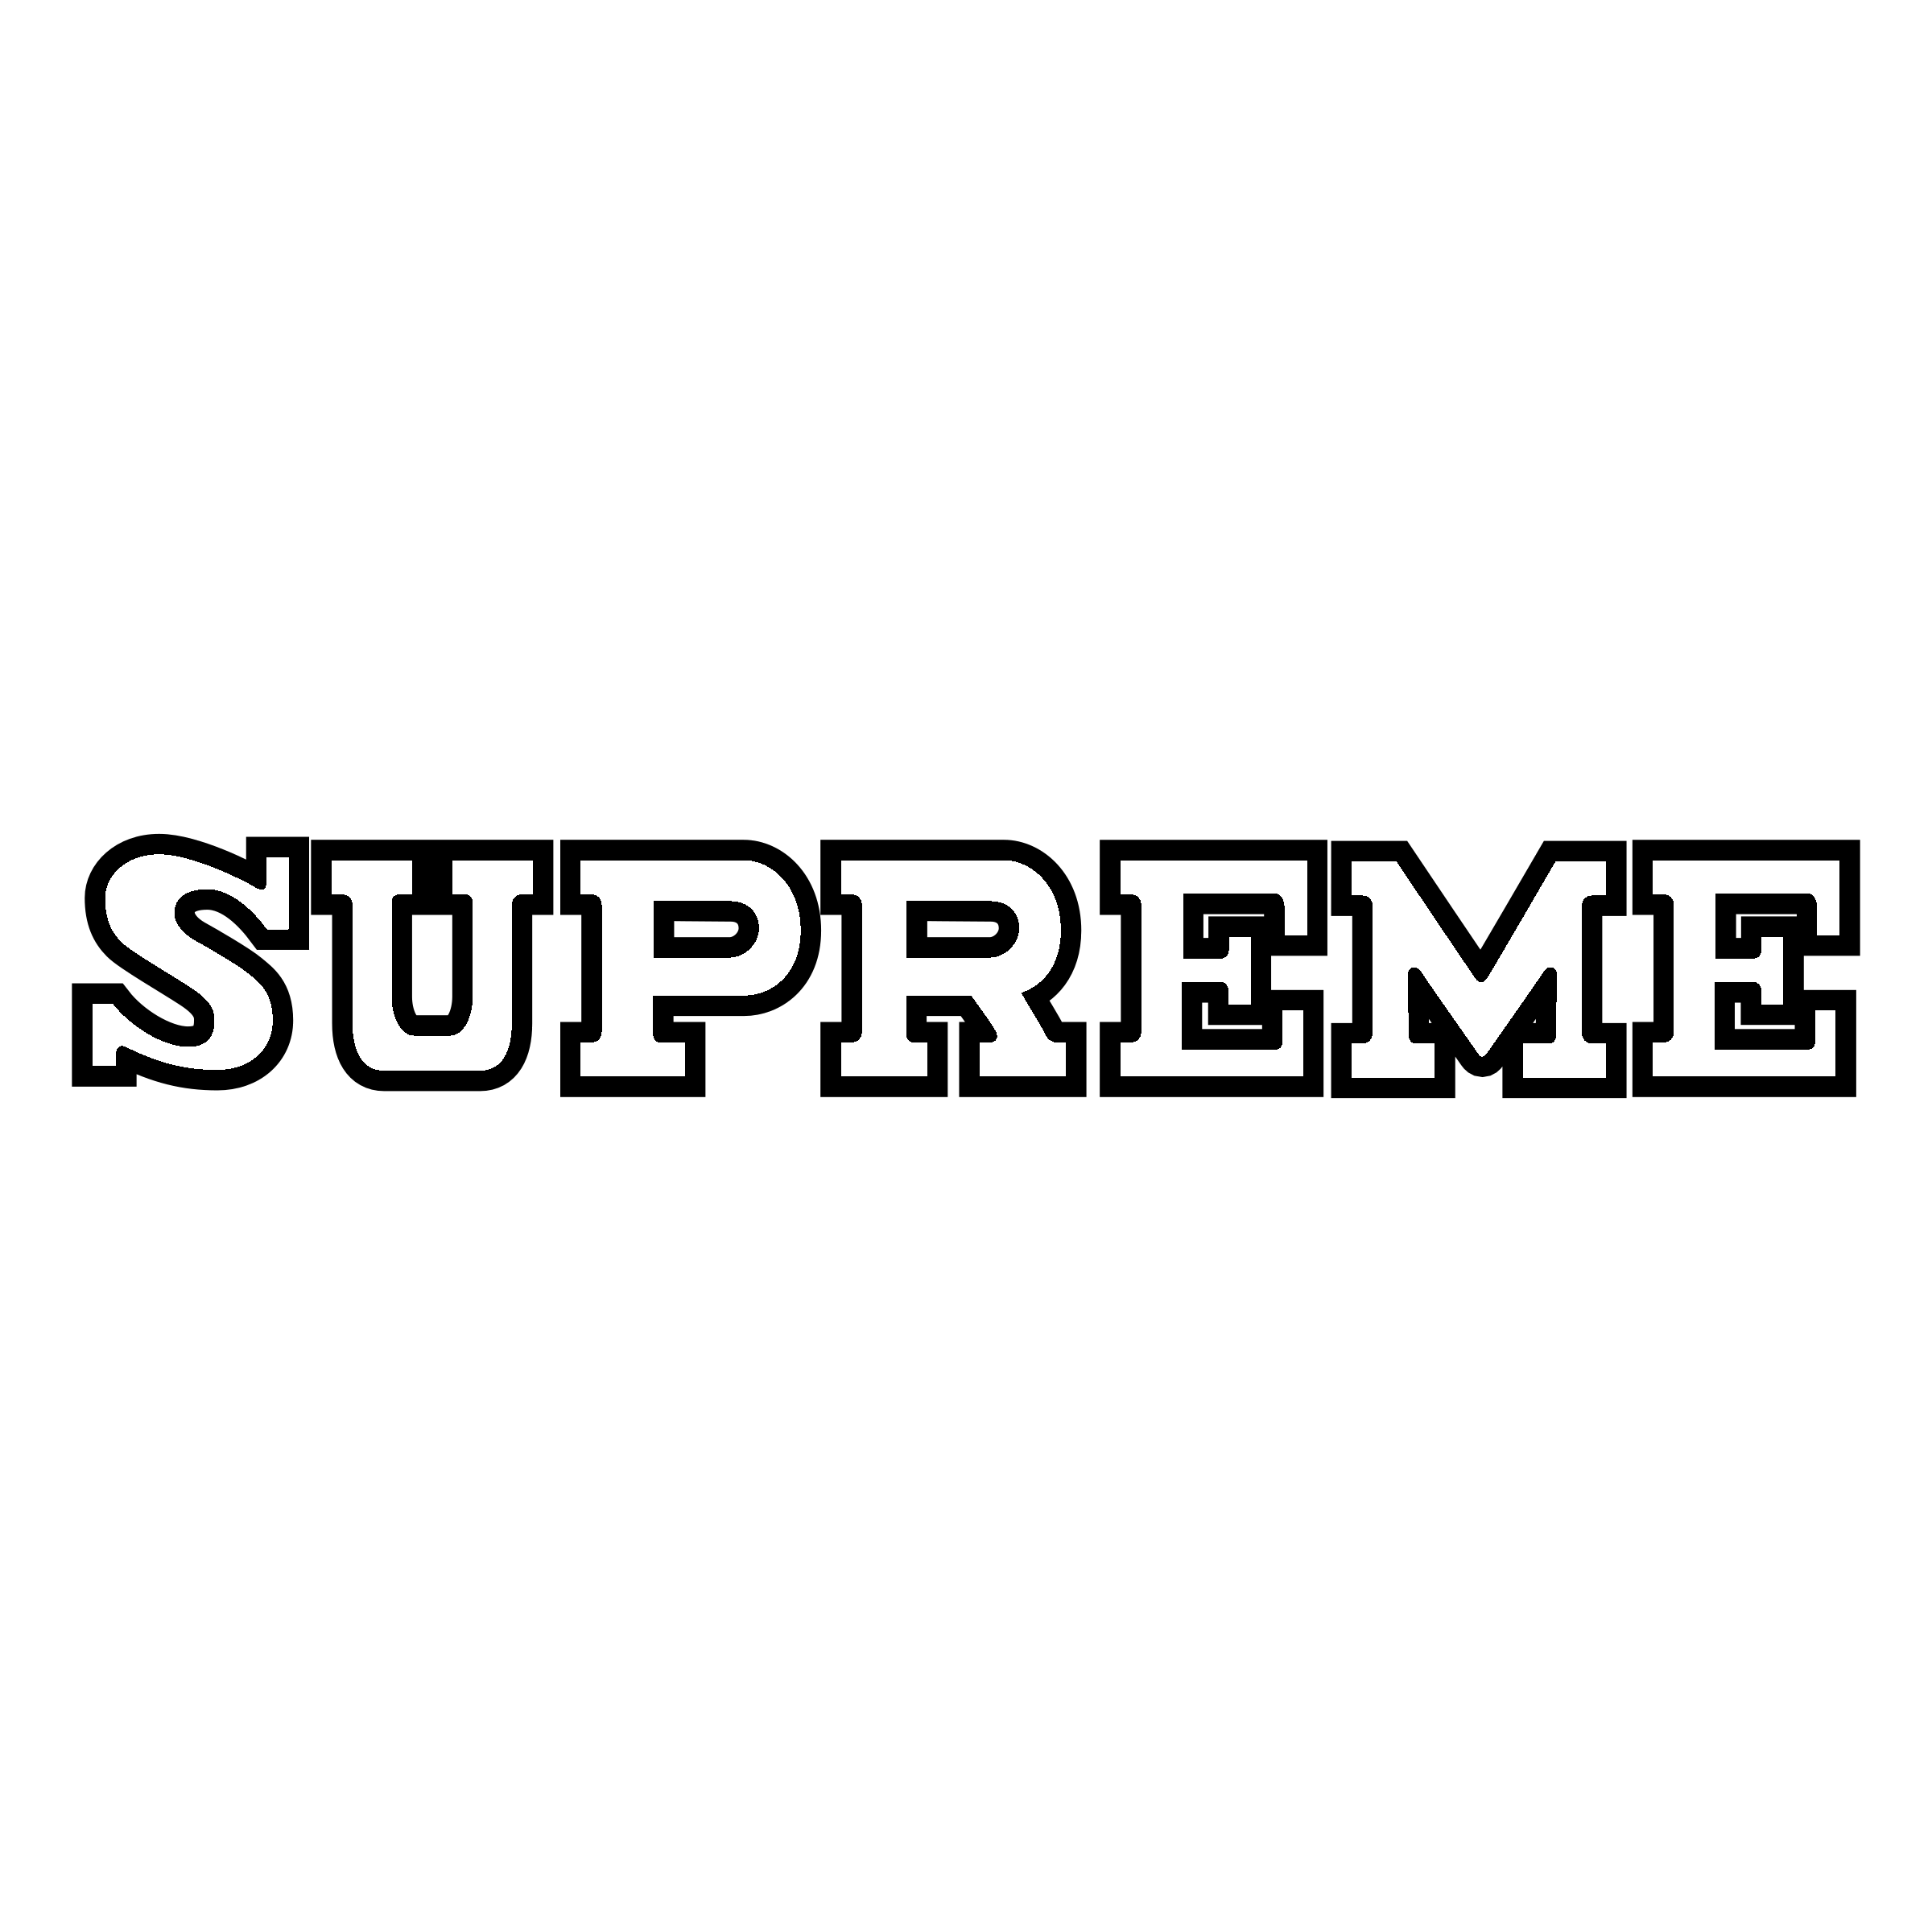 Download Free Png Supreme Sup